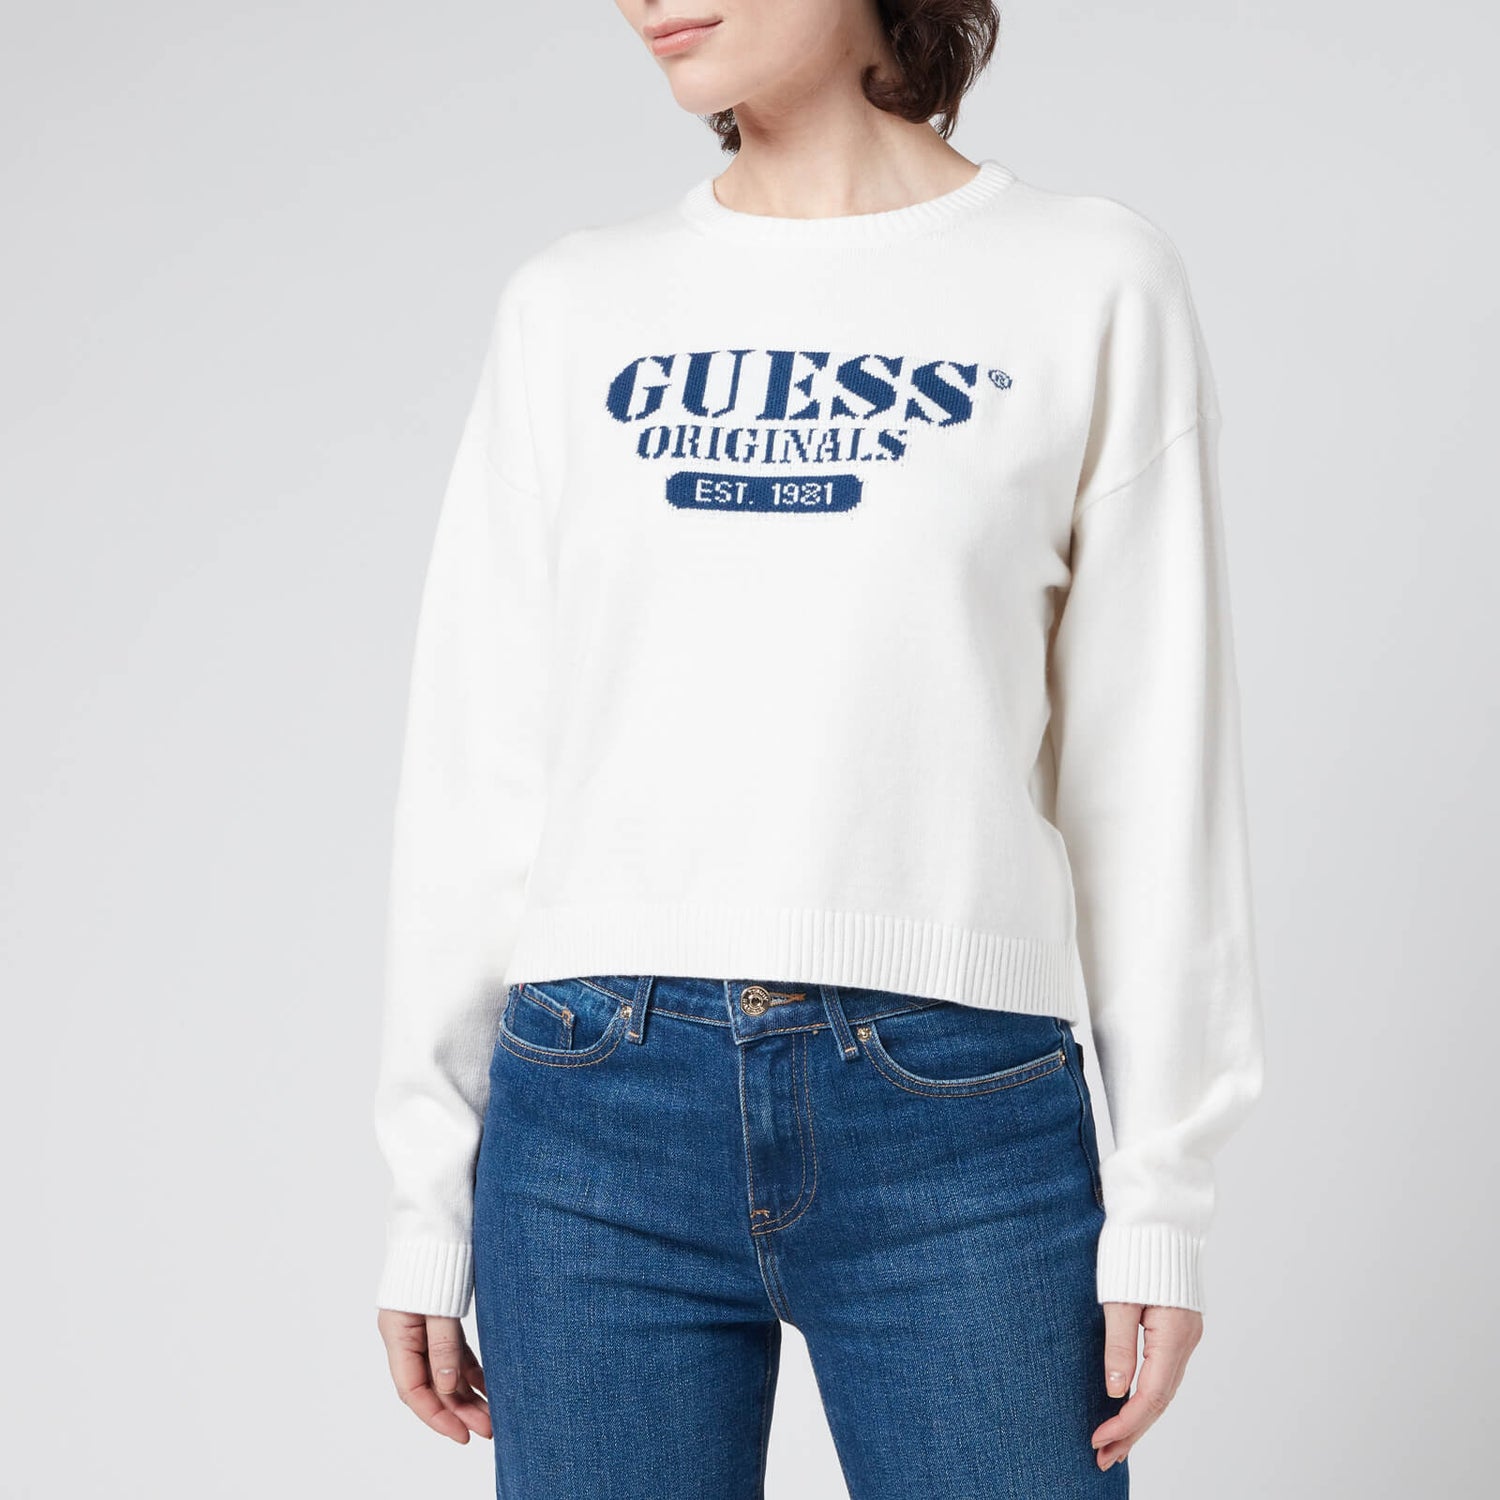 Guess Originals Women's Go Gia Crewneck Sweatshirt - Dove White